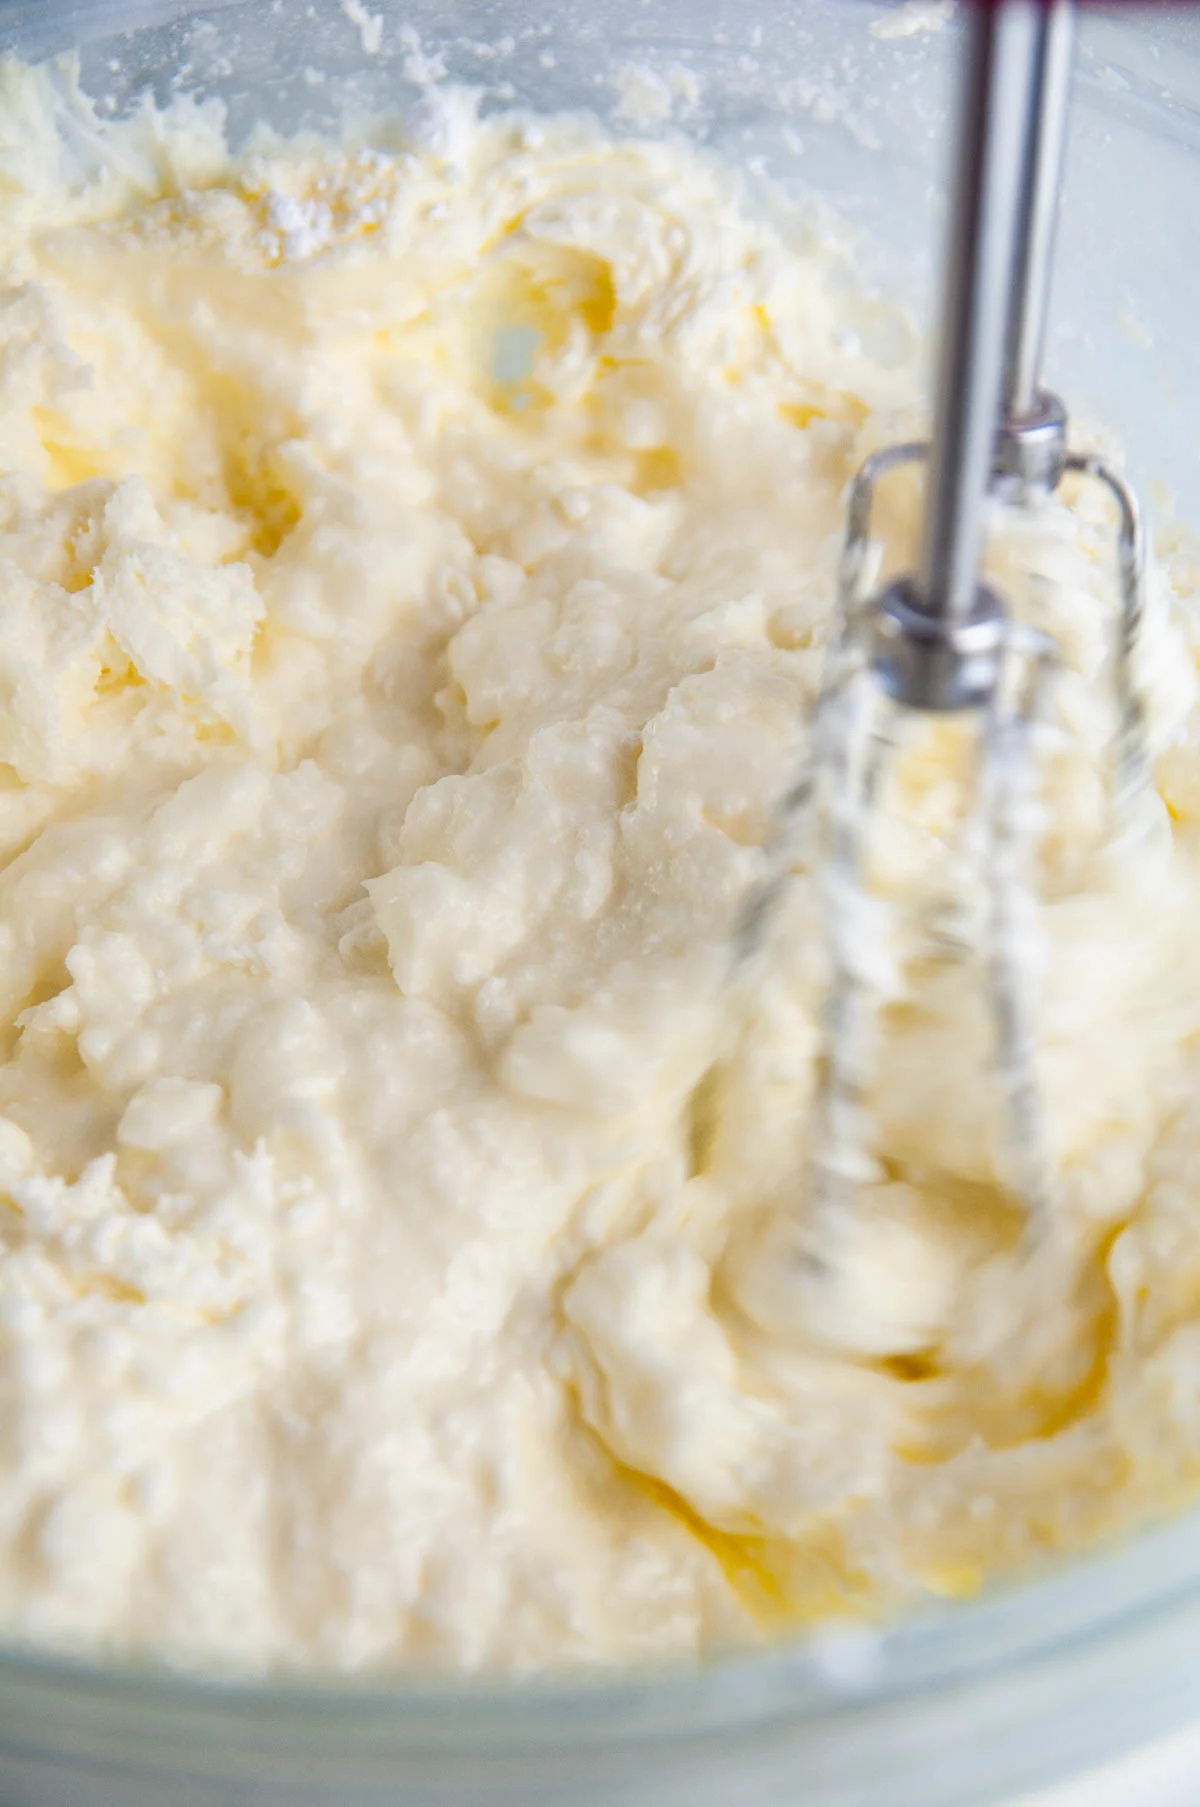 Beat the butter with the sugar, cream, salt, and vanilla to make vanilla buttercream.